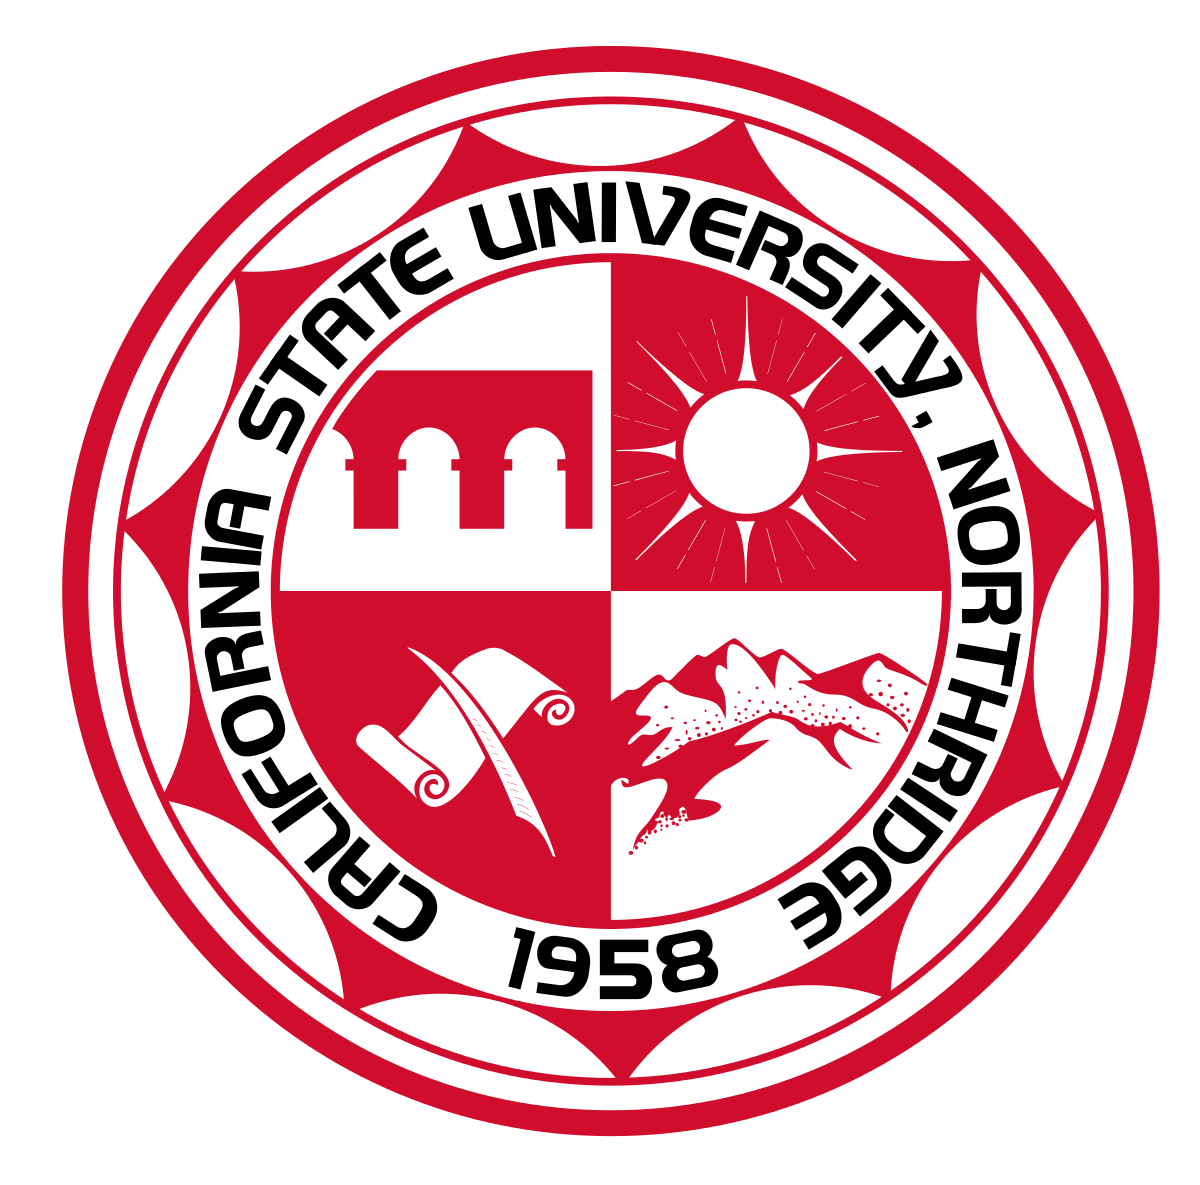 The seal of CSU Northridge